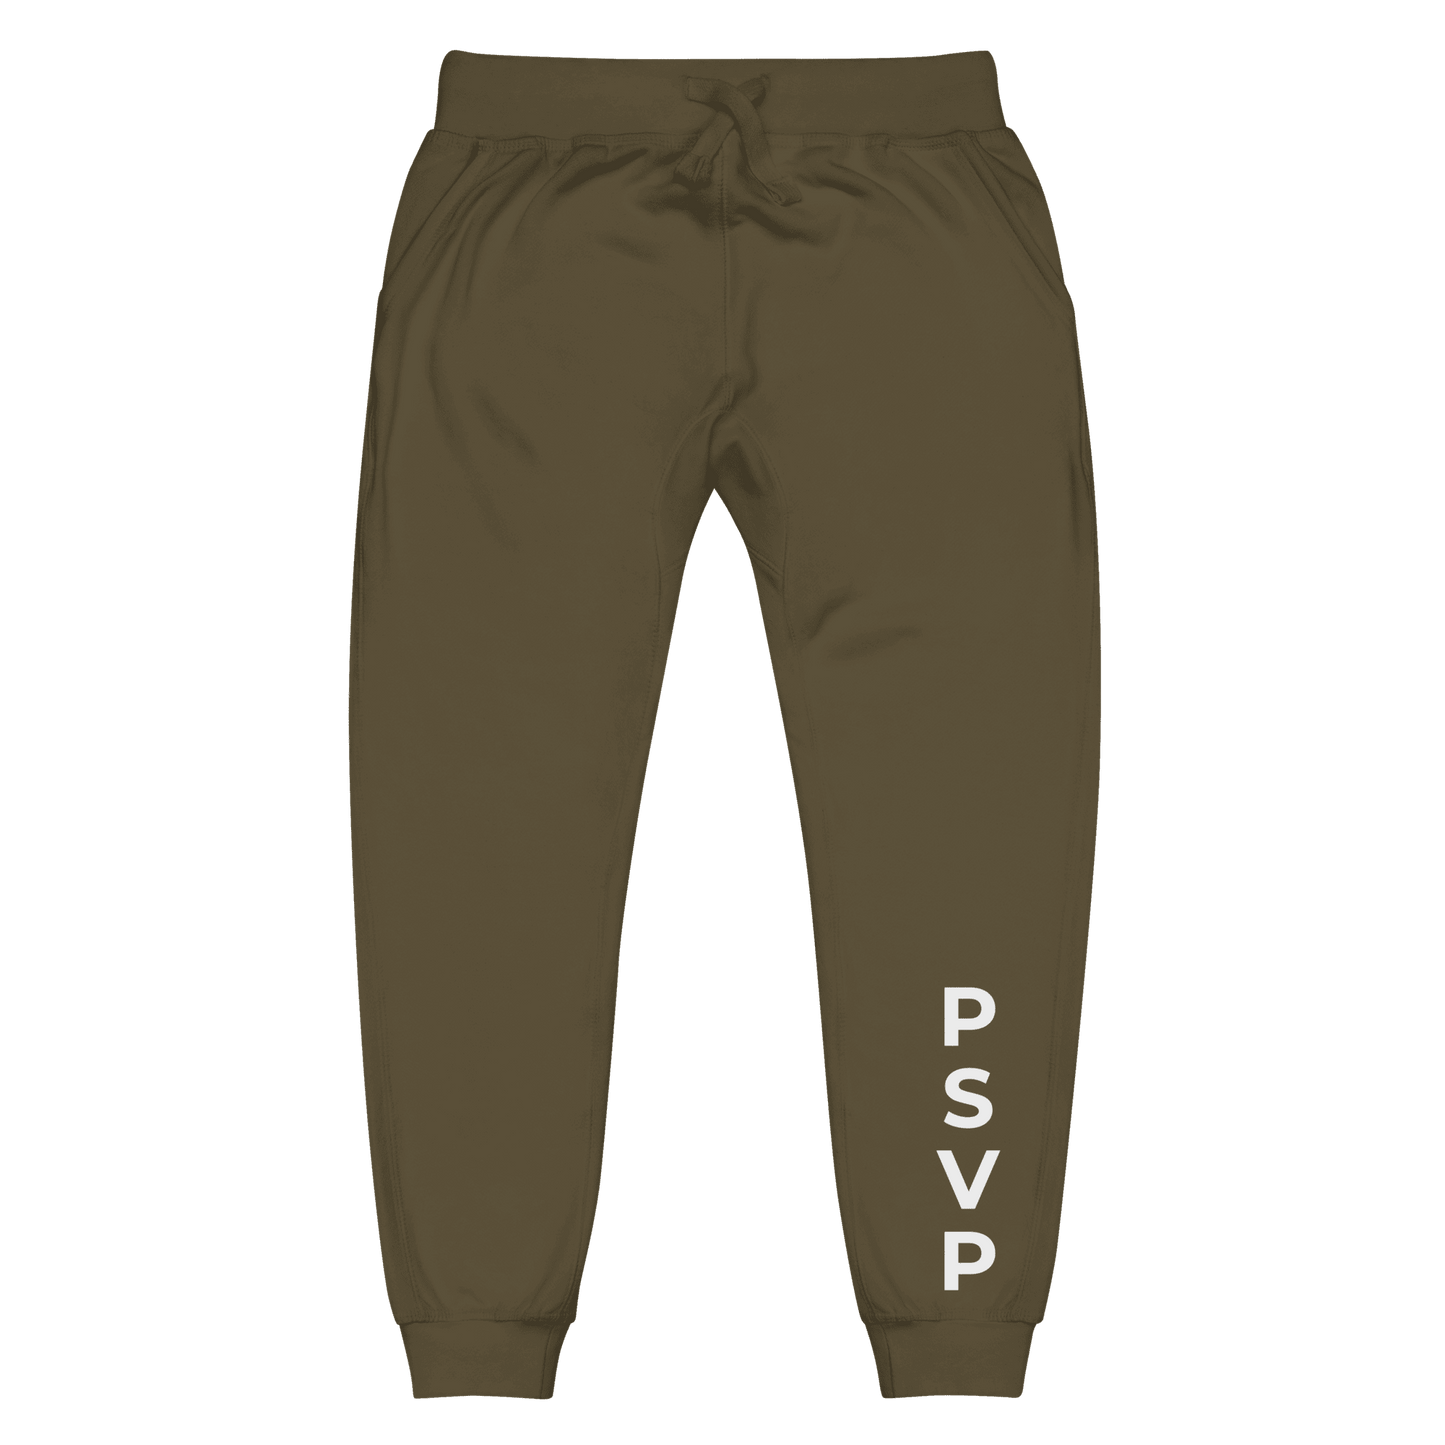 Load image into Gallery viewer, Comfy Military Green Fleece Sweatpants - PSVP | Sweatpants | PARADIS SVP
